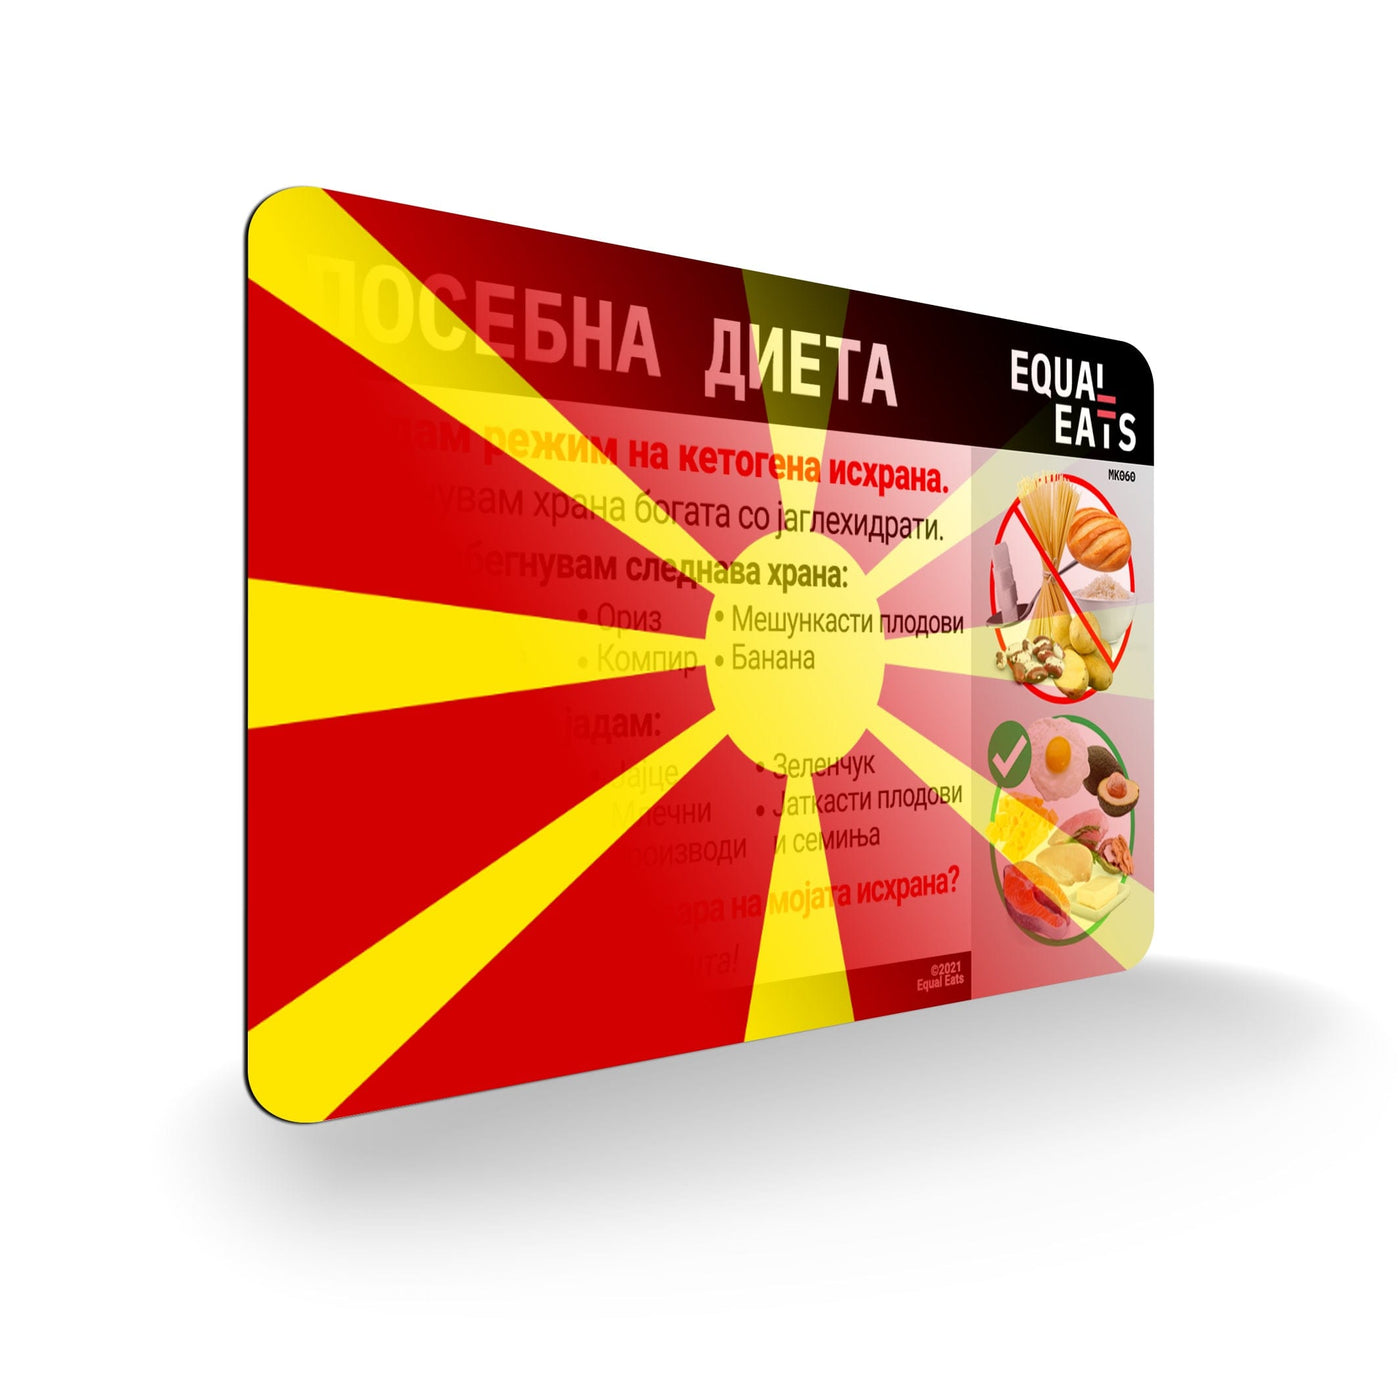 Macedonian Keto Diet Card